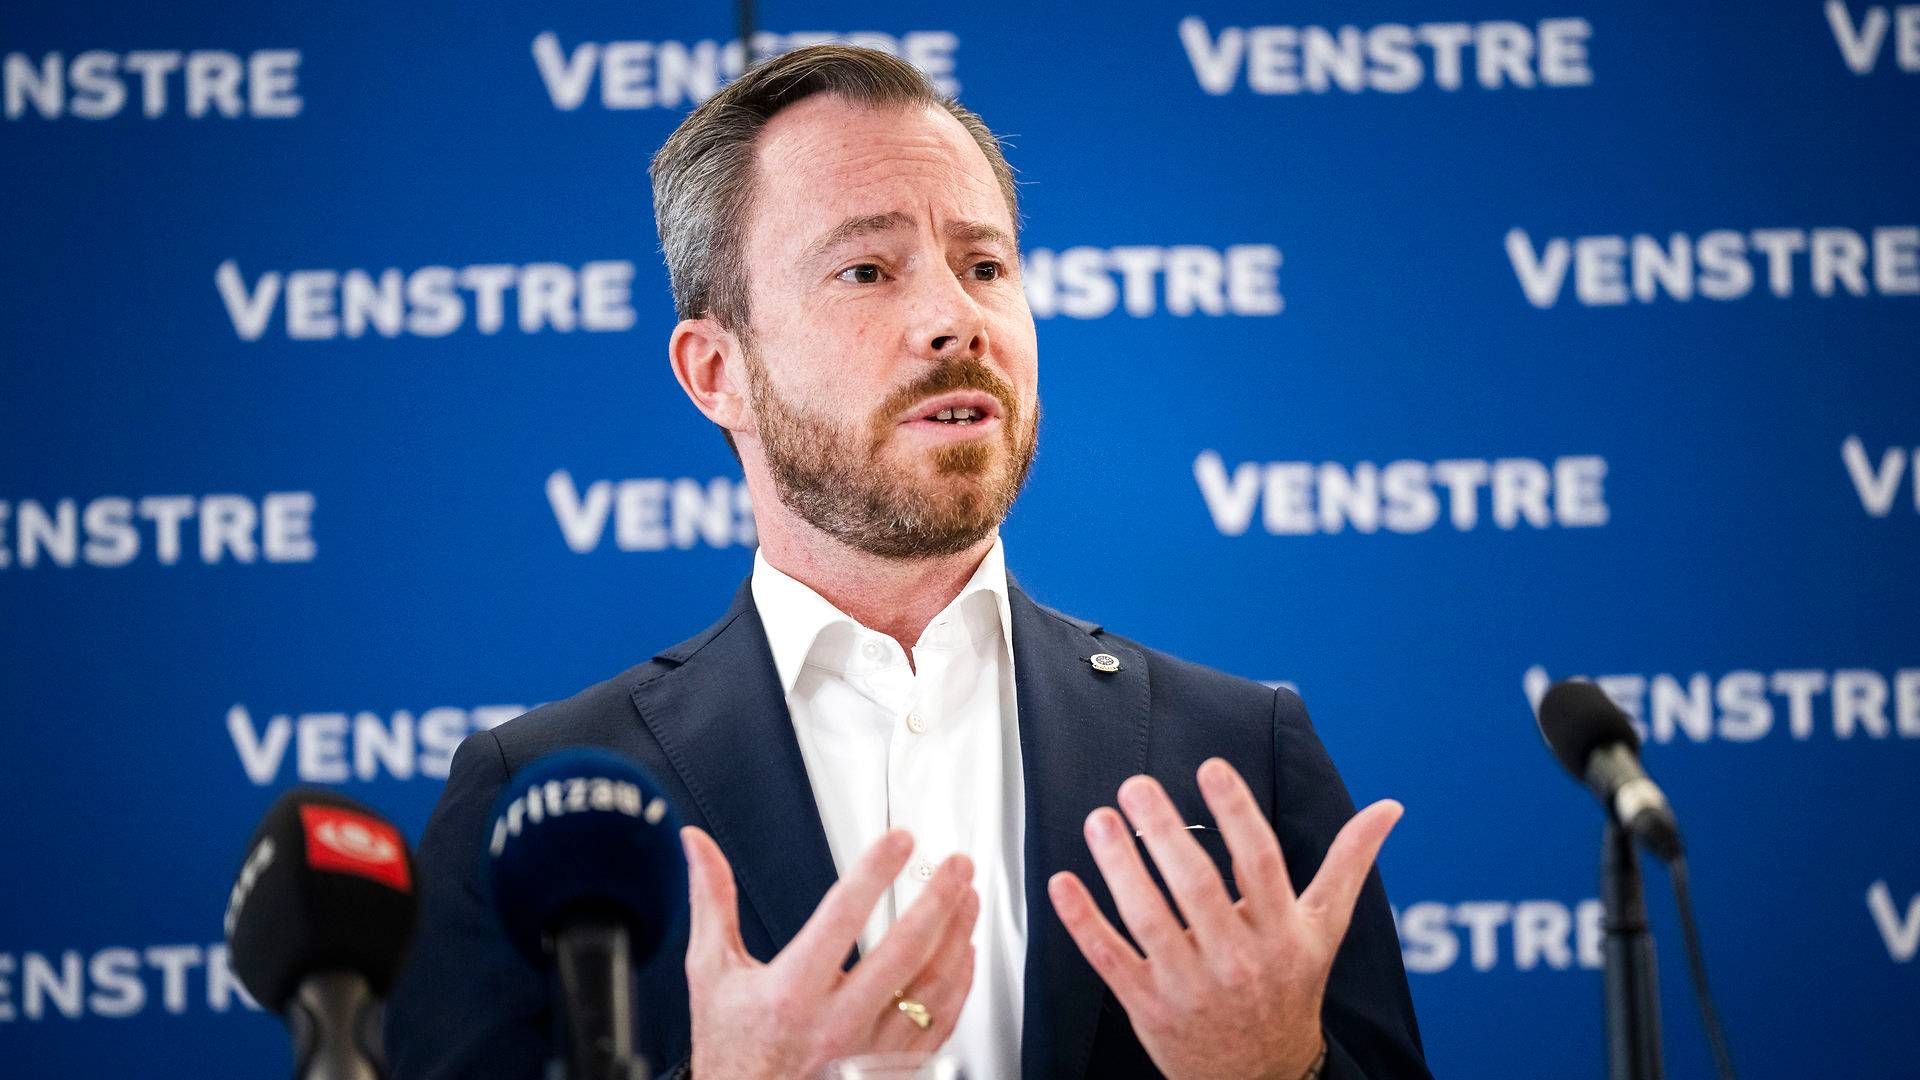 Venstres formand, Jakob Ellemann-Jensen. | Foto: Martin Sylvest/Ritzau Scanpix